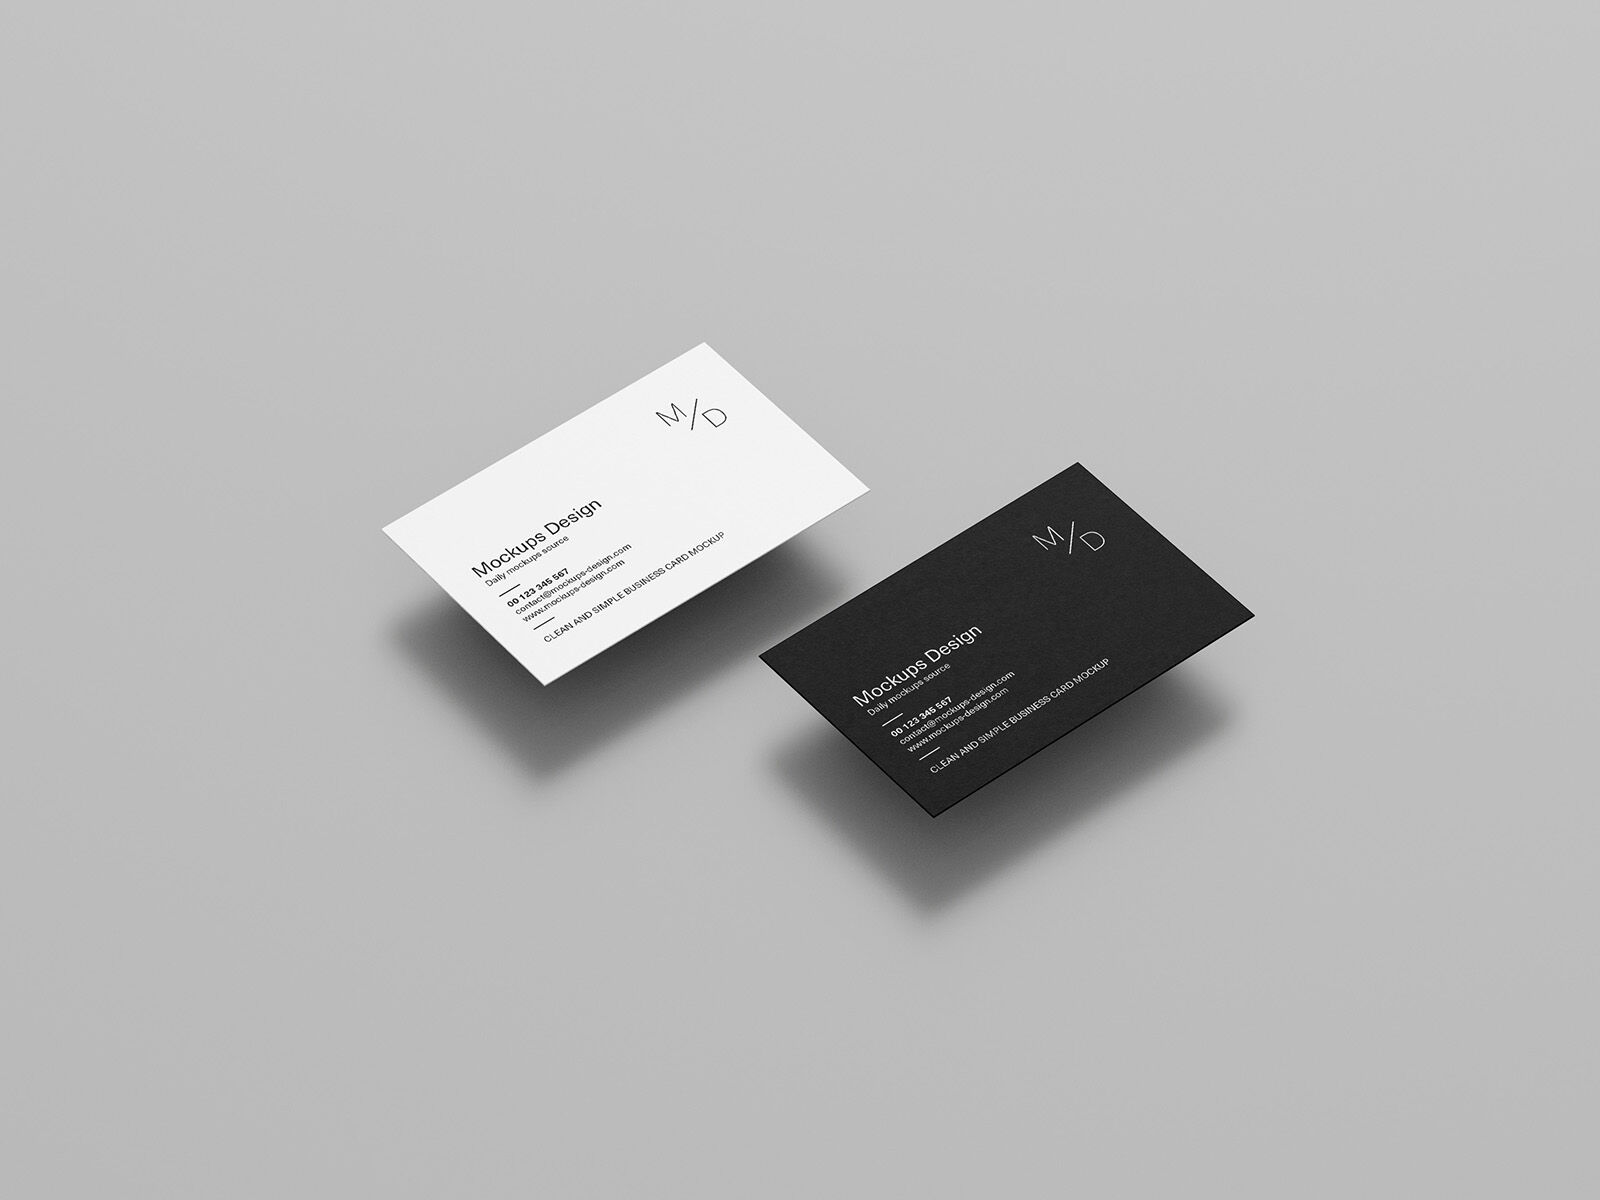 A Set of 7 Minimal Business Cards Mockups FREE PSD